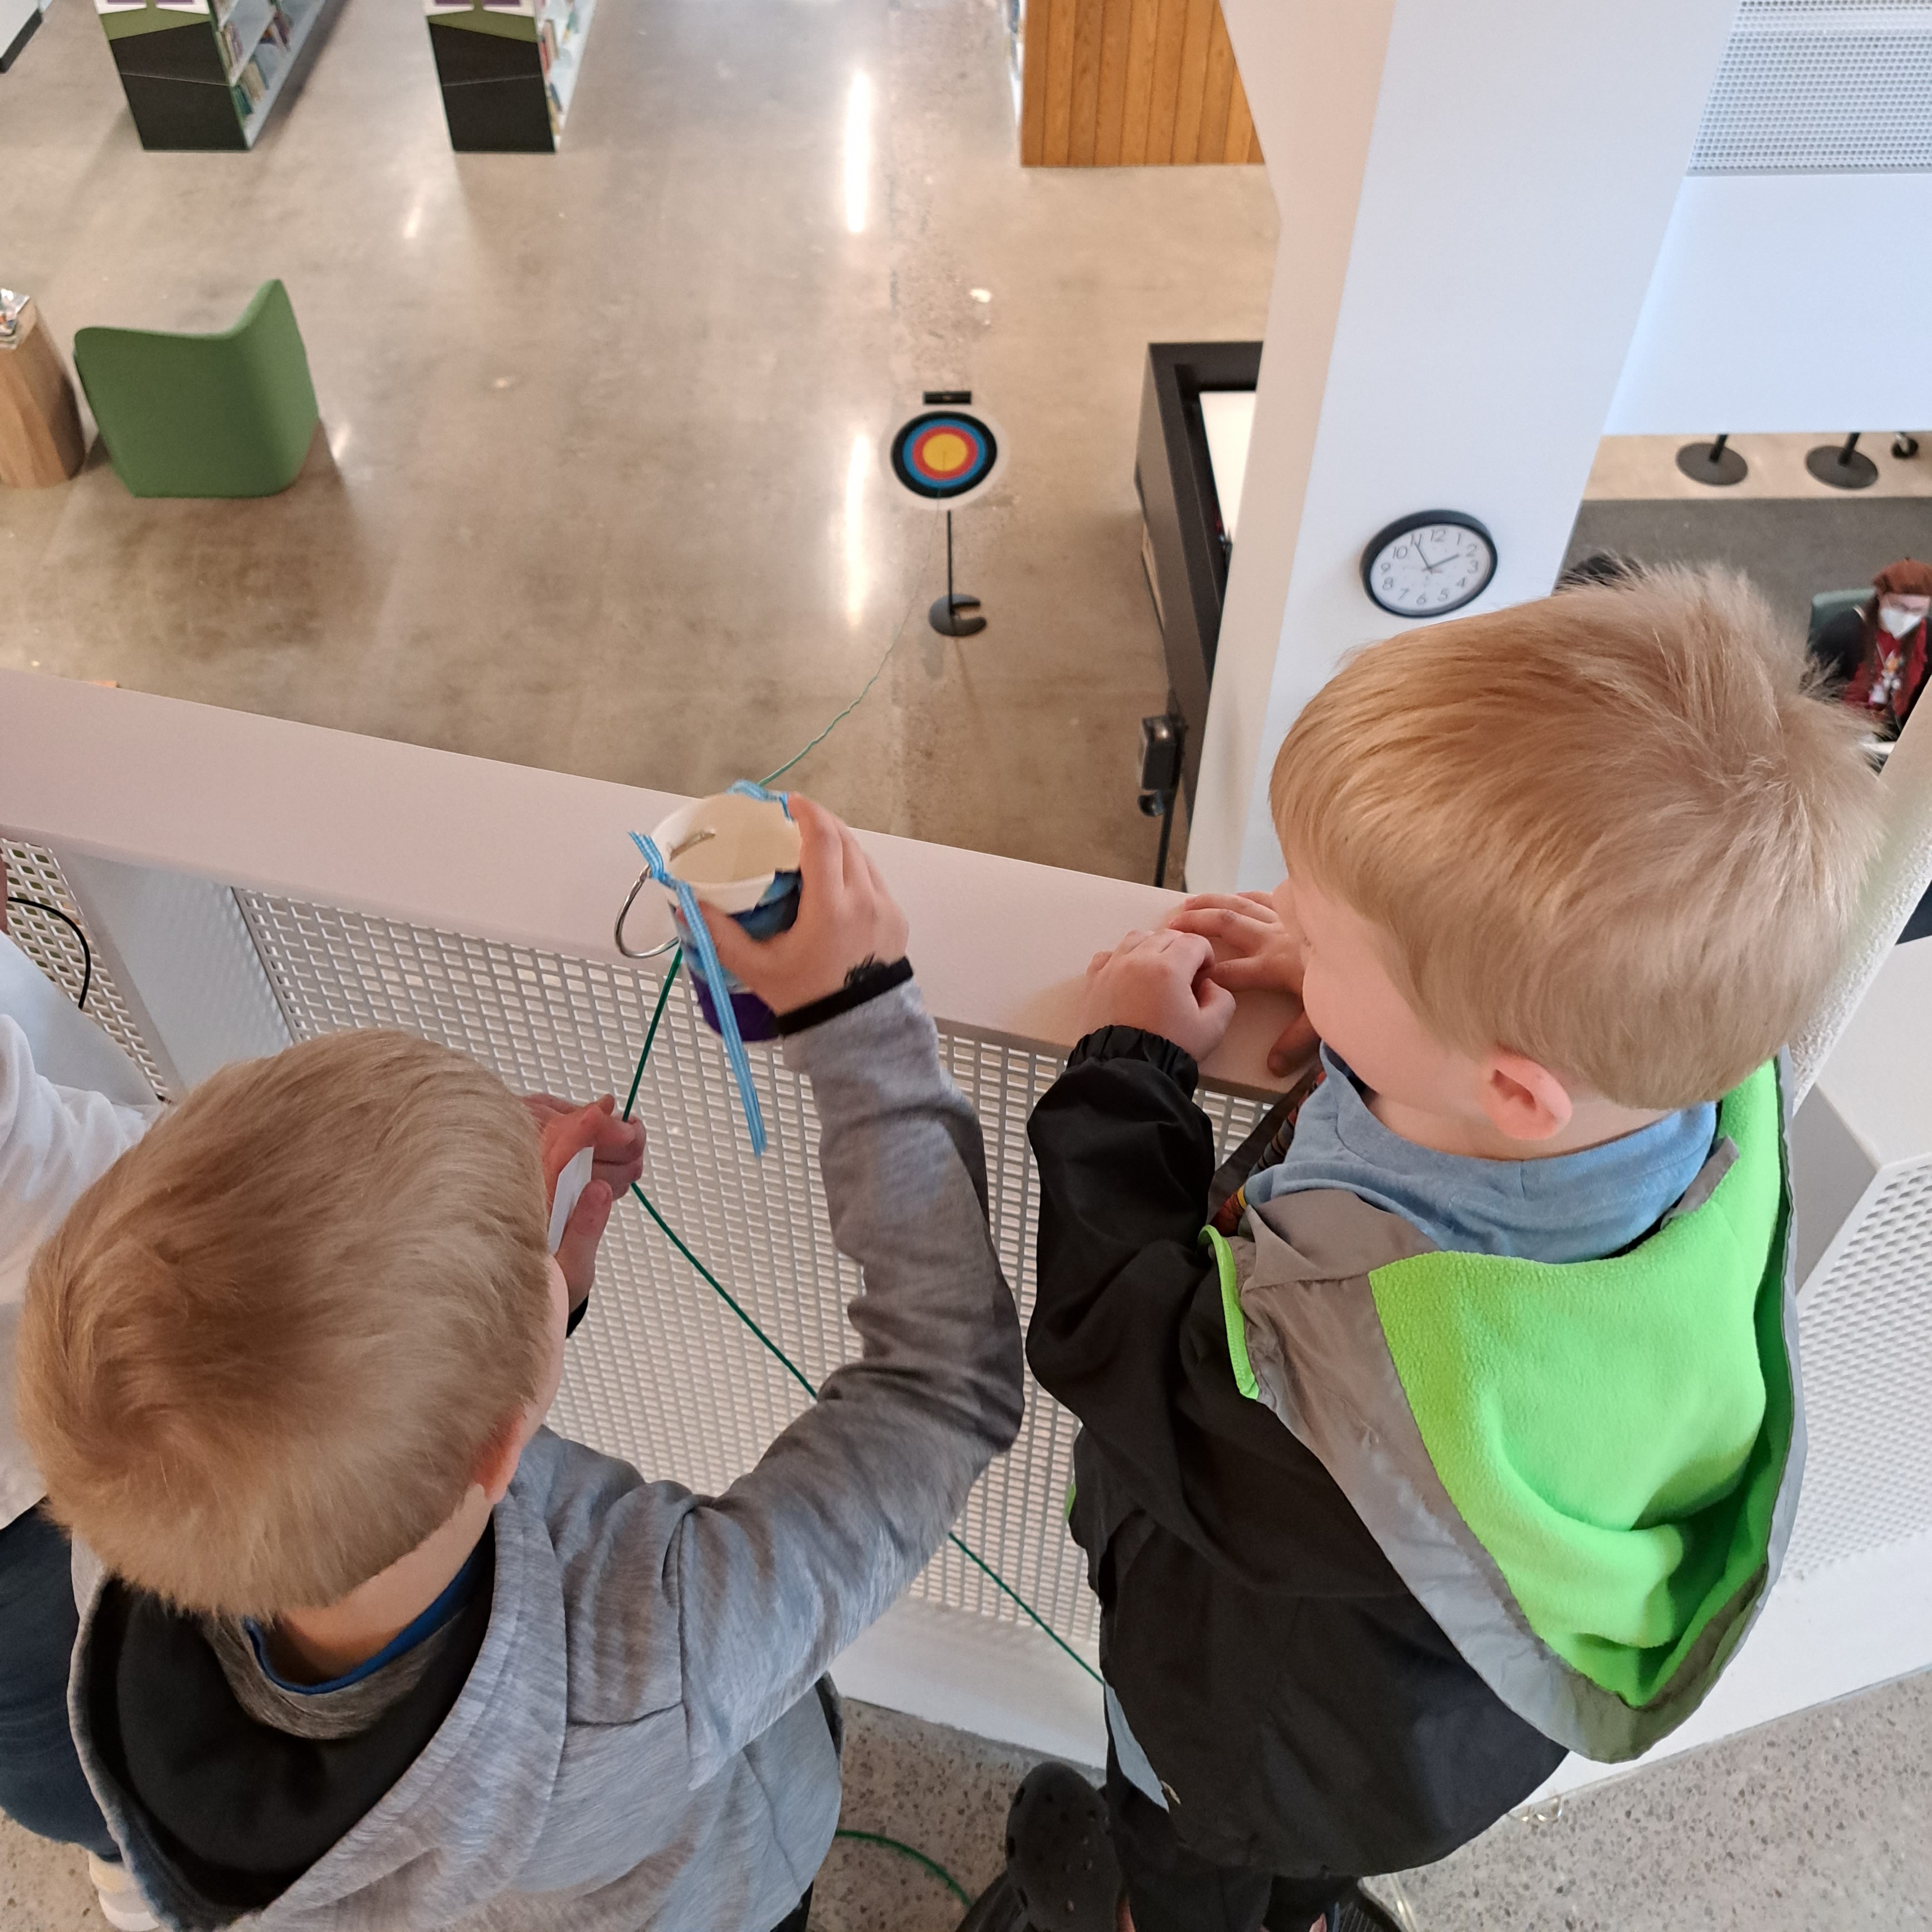 Children using zip line craft